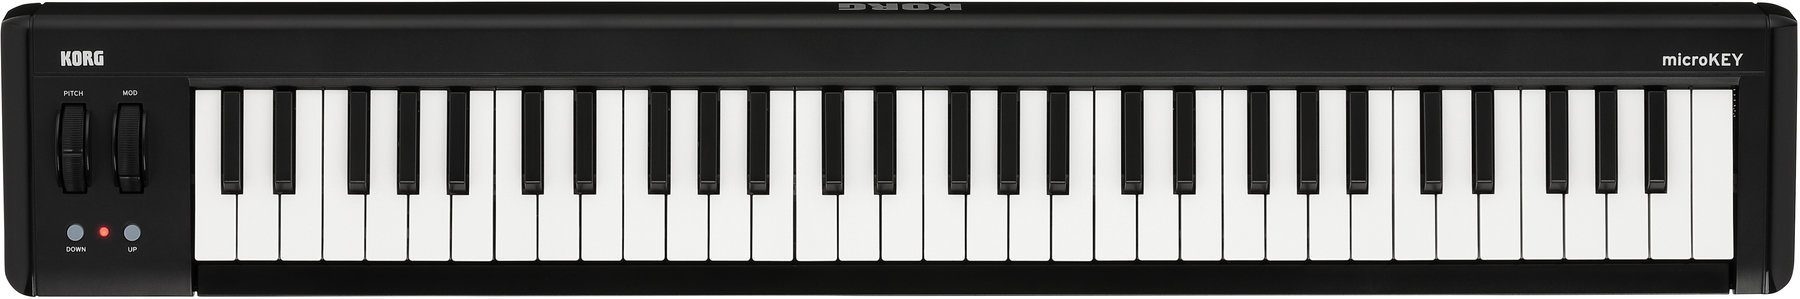 Master Keyboard Korg MicroKEY2-61